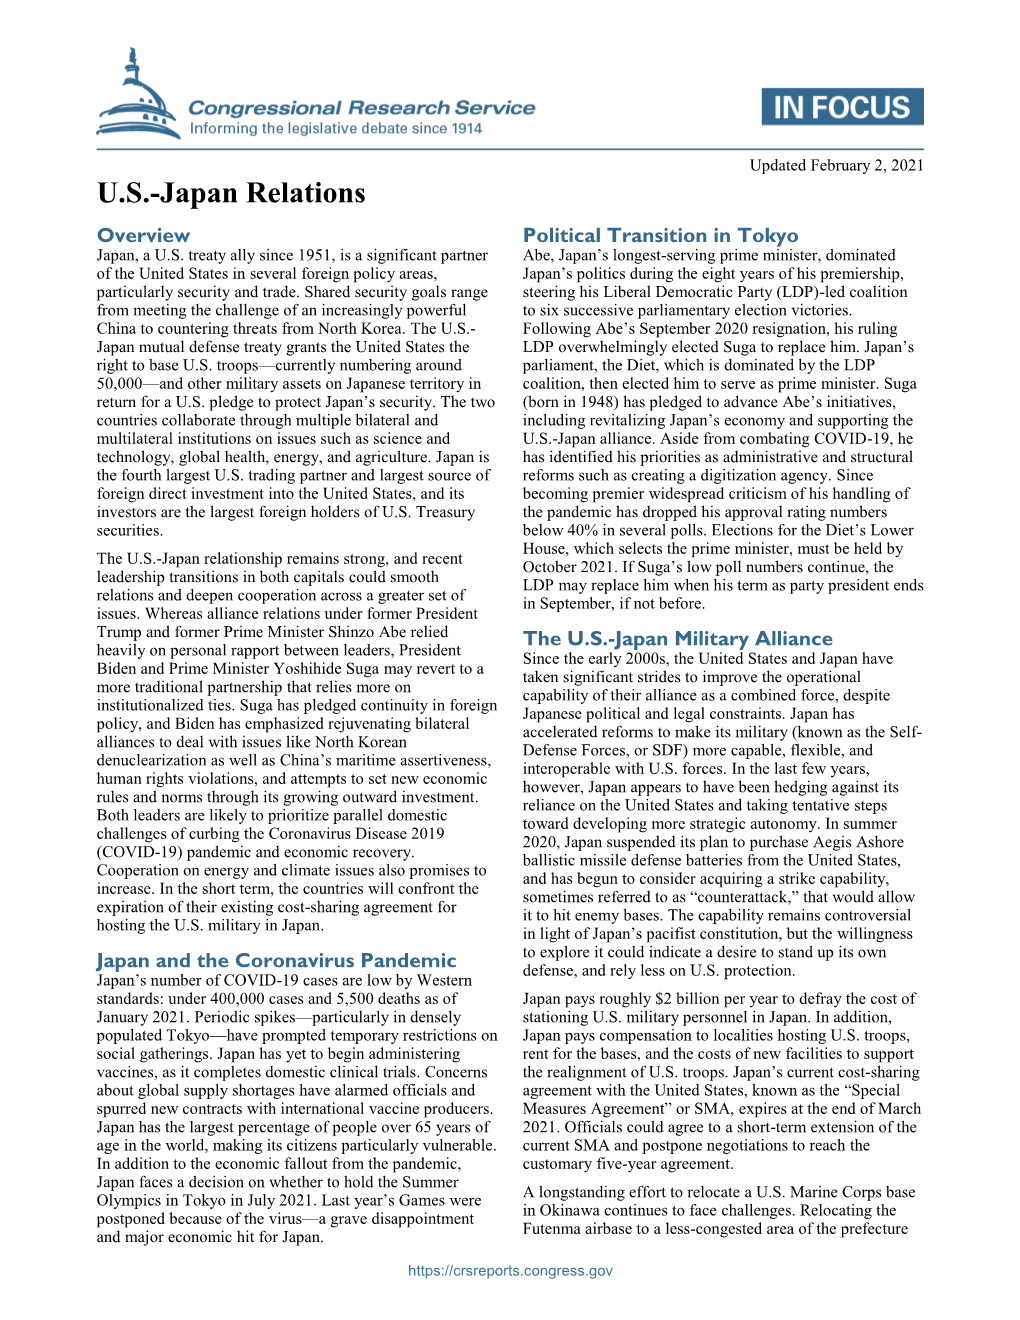 U.S.-Japan Relations Overview Political Transition in Tokyo Japan, a U.S